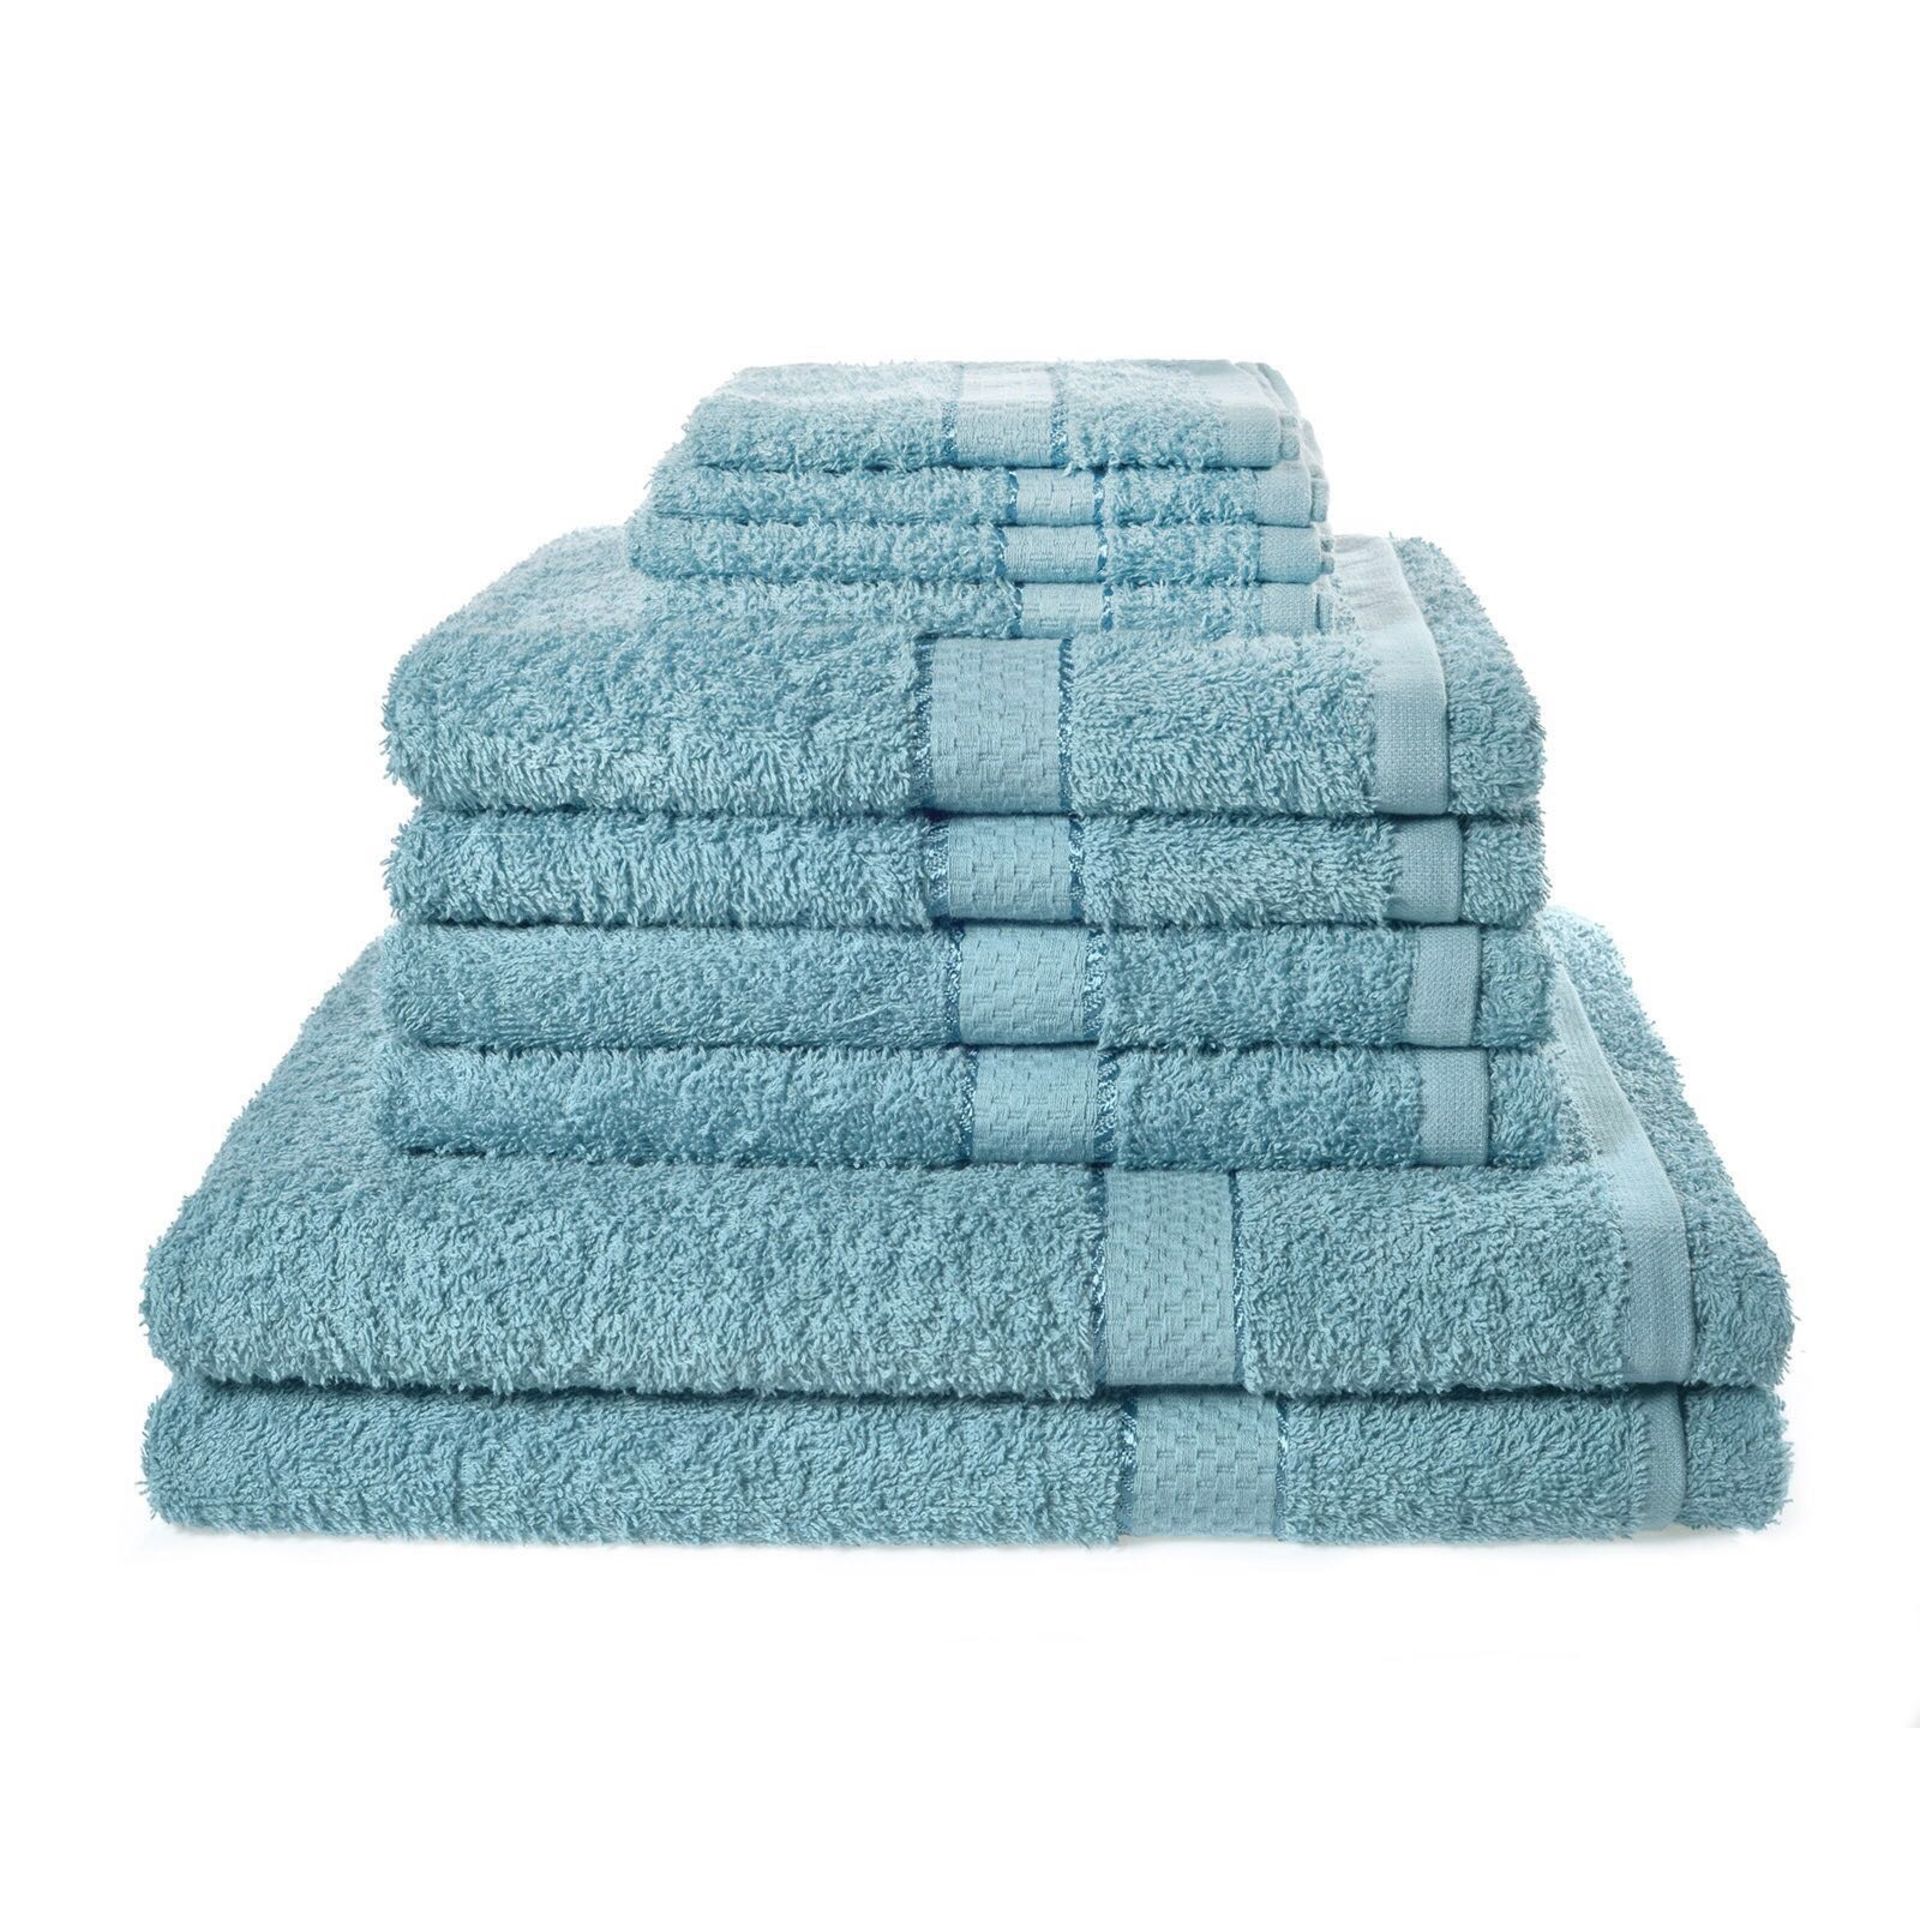 V Brand New Luxury 10 Piece Aqua Towel Bale Set Including 4 Face Cloths - 4 Hand Towels - 2 Bath